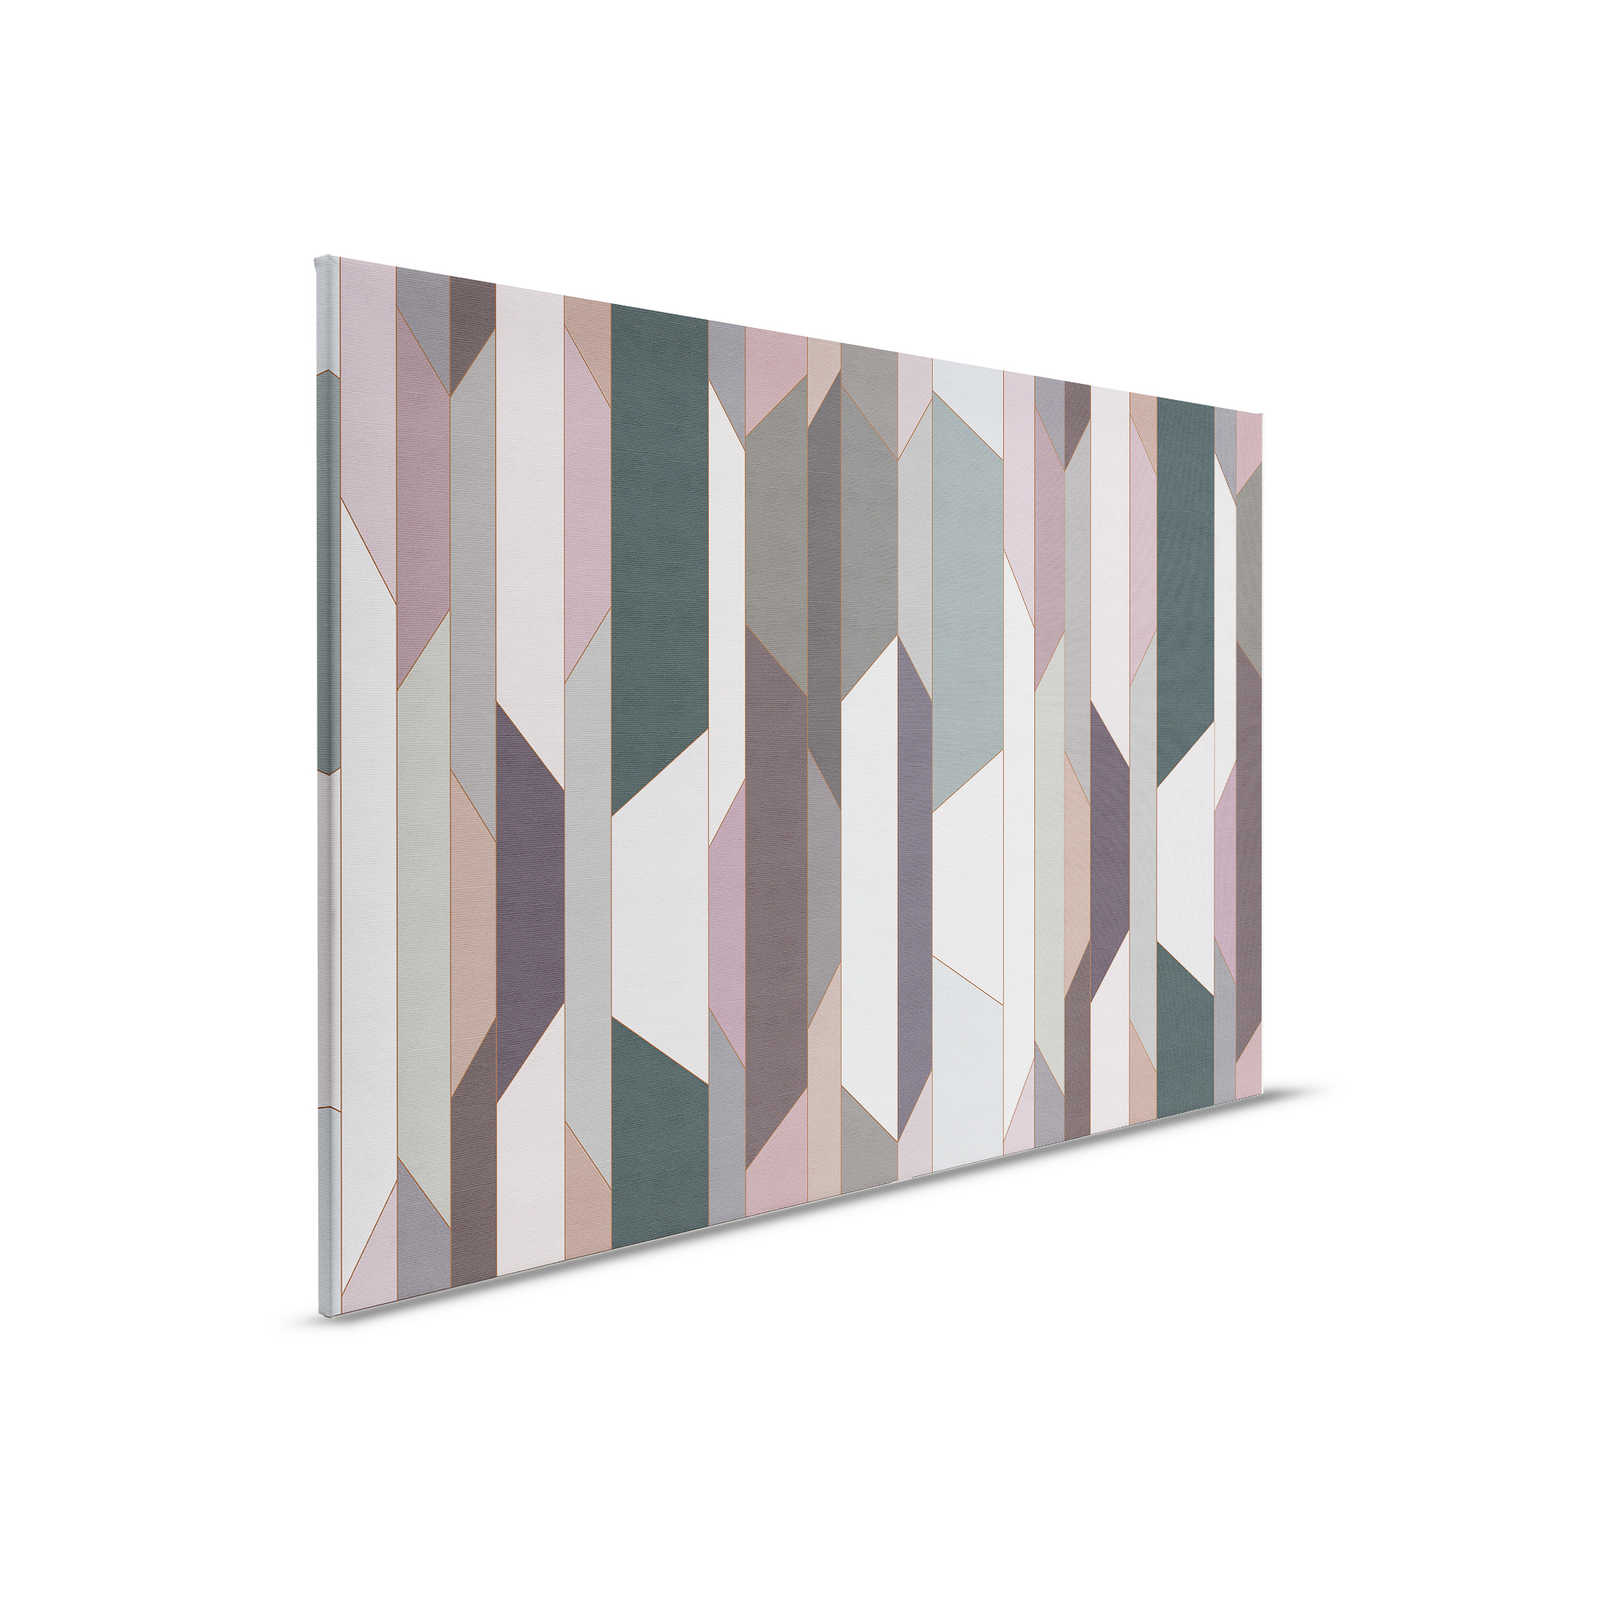         Fold 2 - Canvas painting with geometric retro pattern - 0.90 m x 0.60 m
    